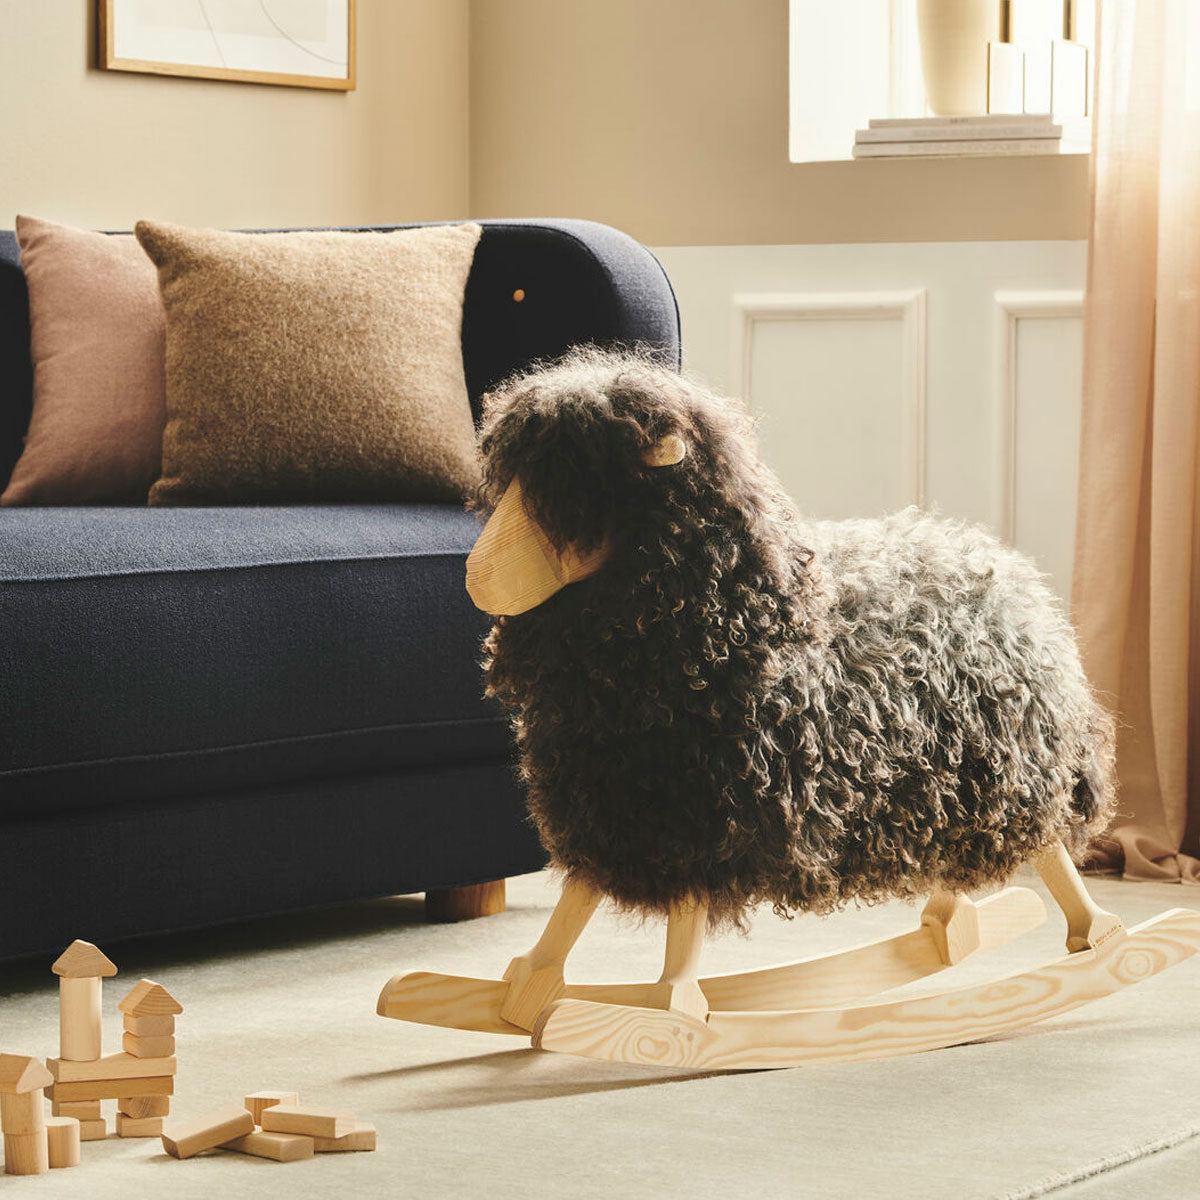 The Rocking Sheep │ Povl Kjer Design │ Made in Denmark │ Natural Grey Long Wool │ Large